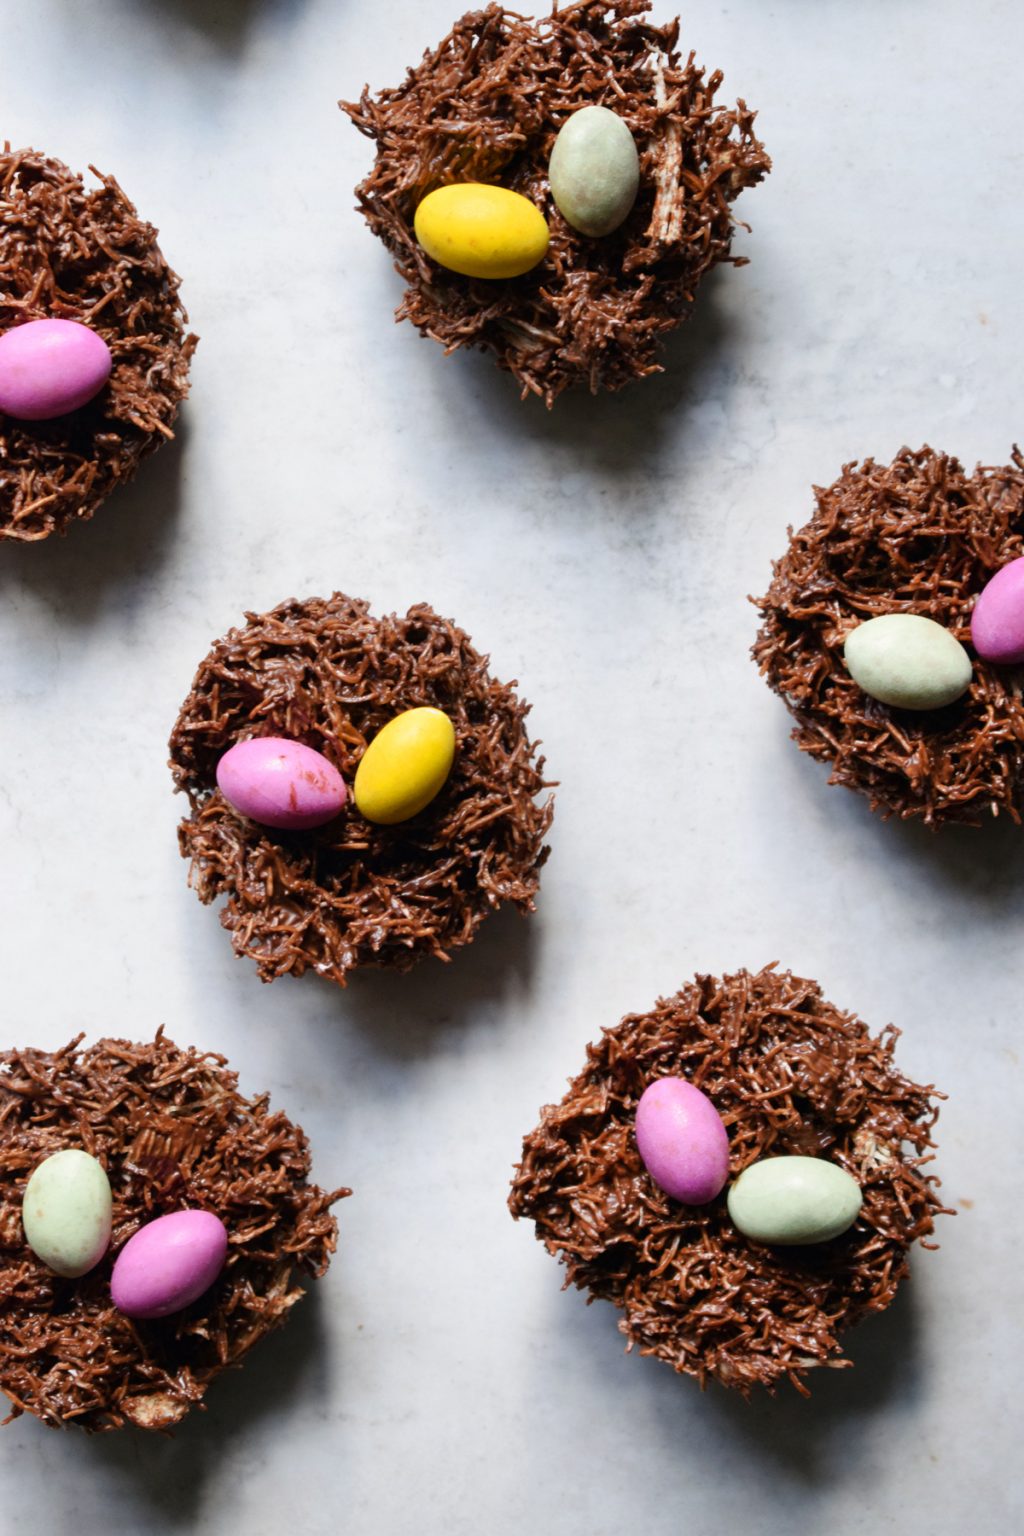 Vegan Shredded Wheat Chocolate Nests - Let's Eat Smart